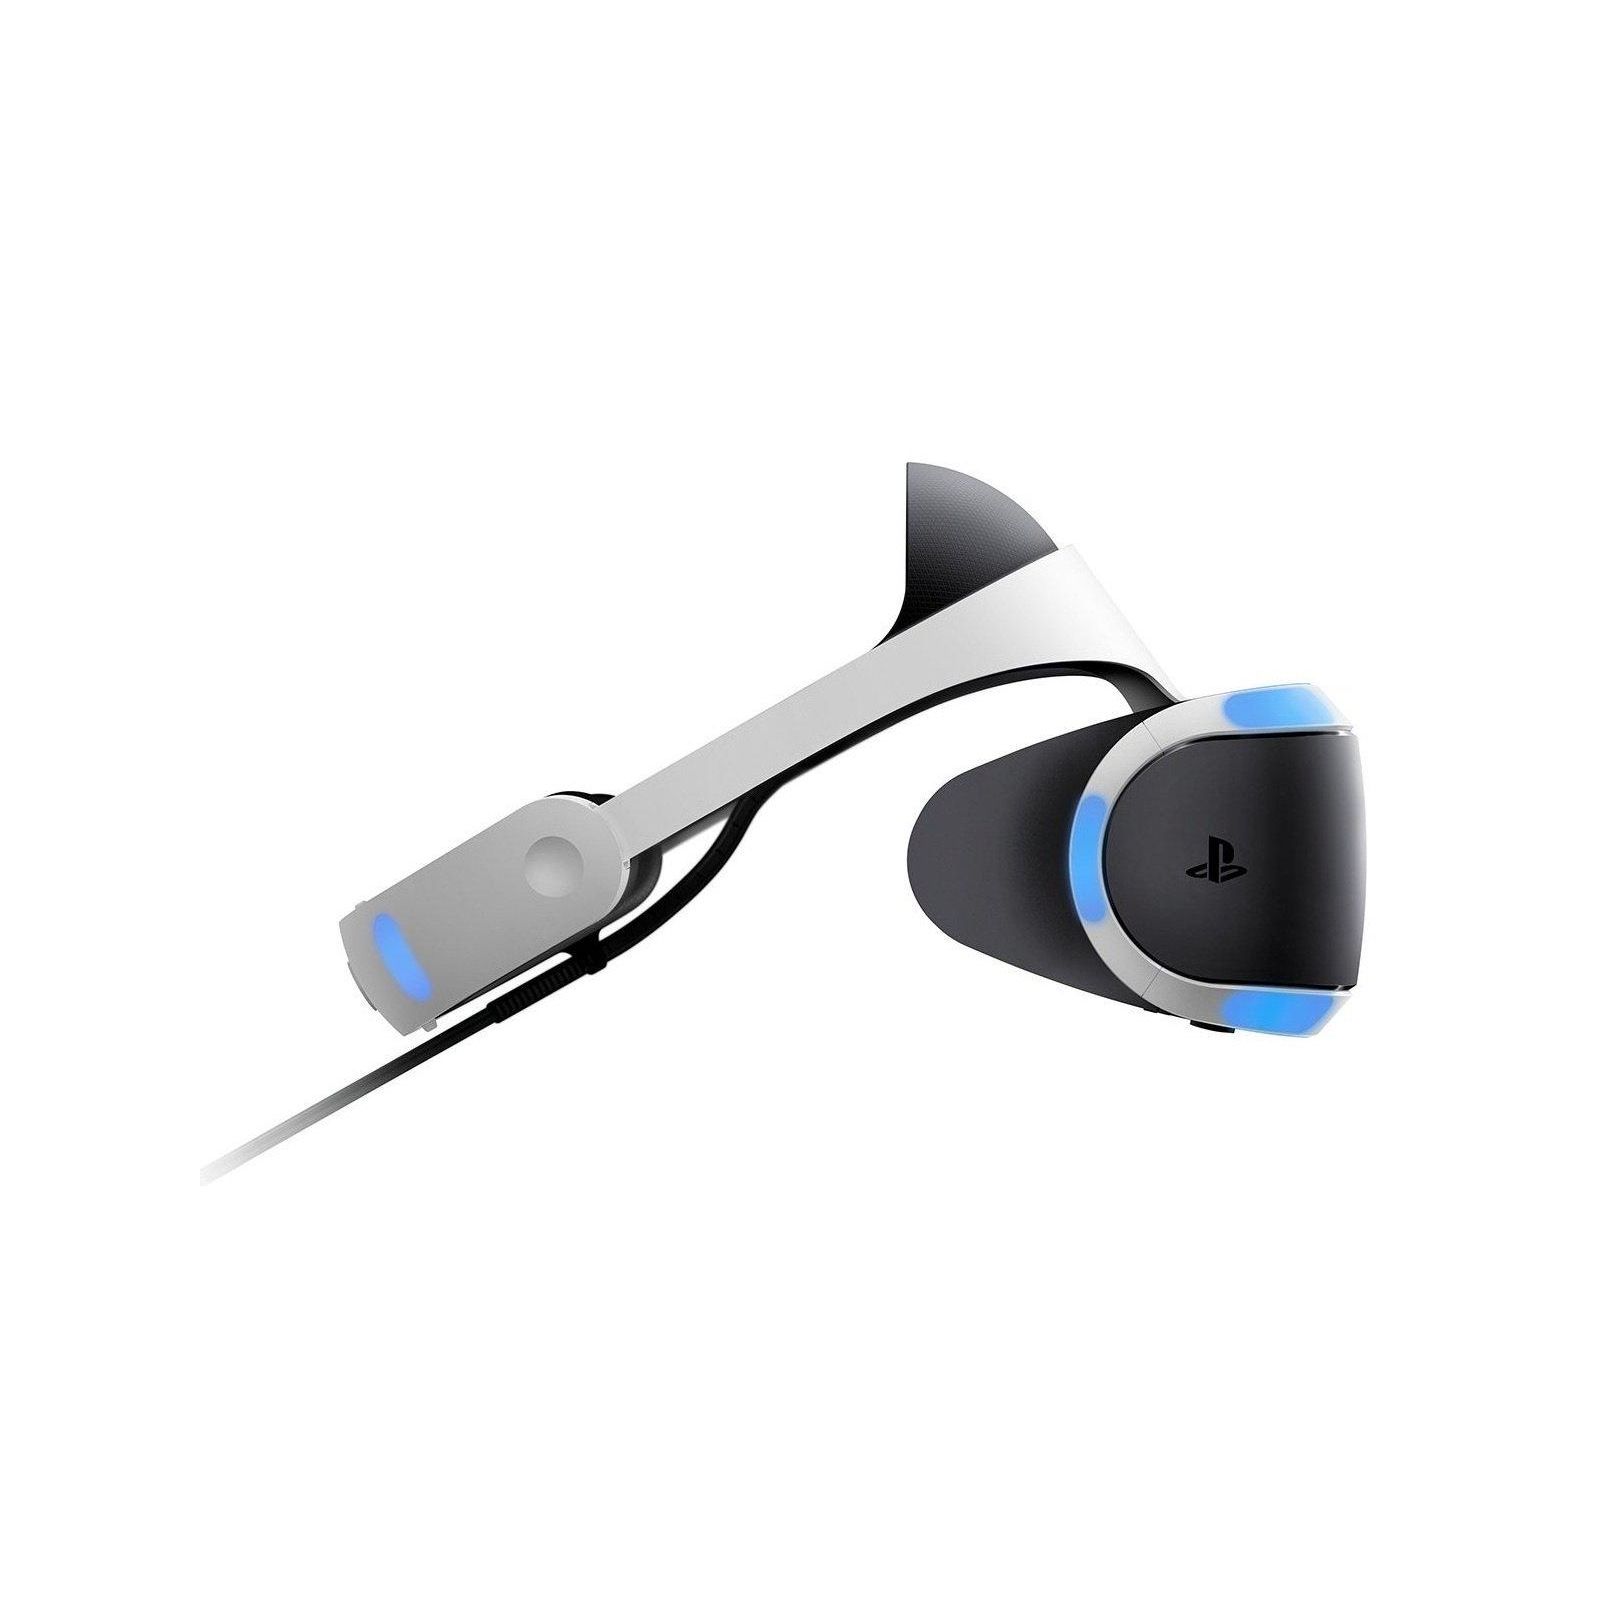 Окуляри віртуальної реальності Sony PlayStation VR (Camera +GTSport +VR Worlds) зображення 5